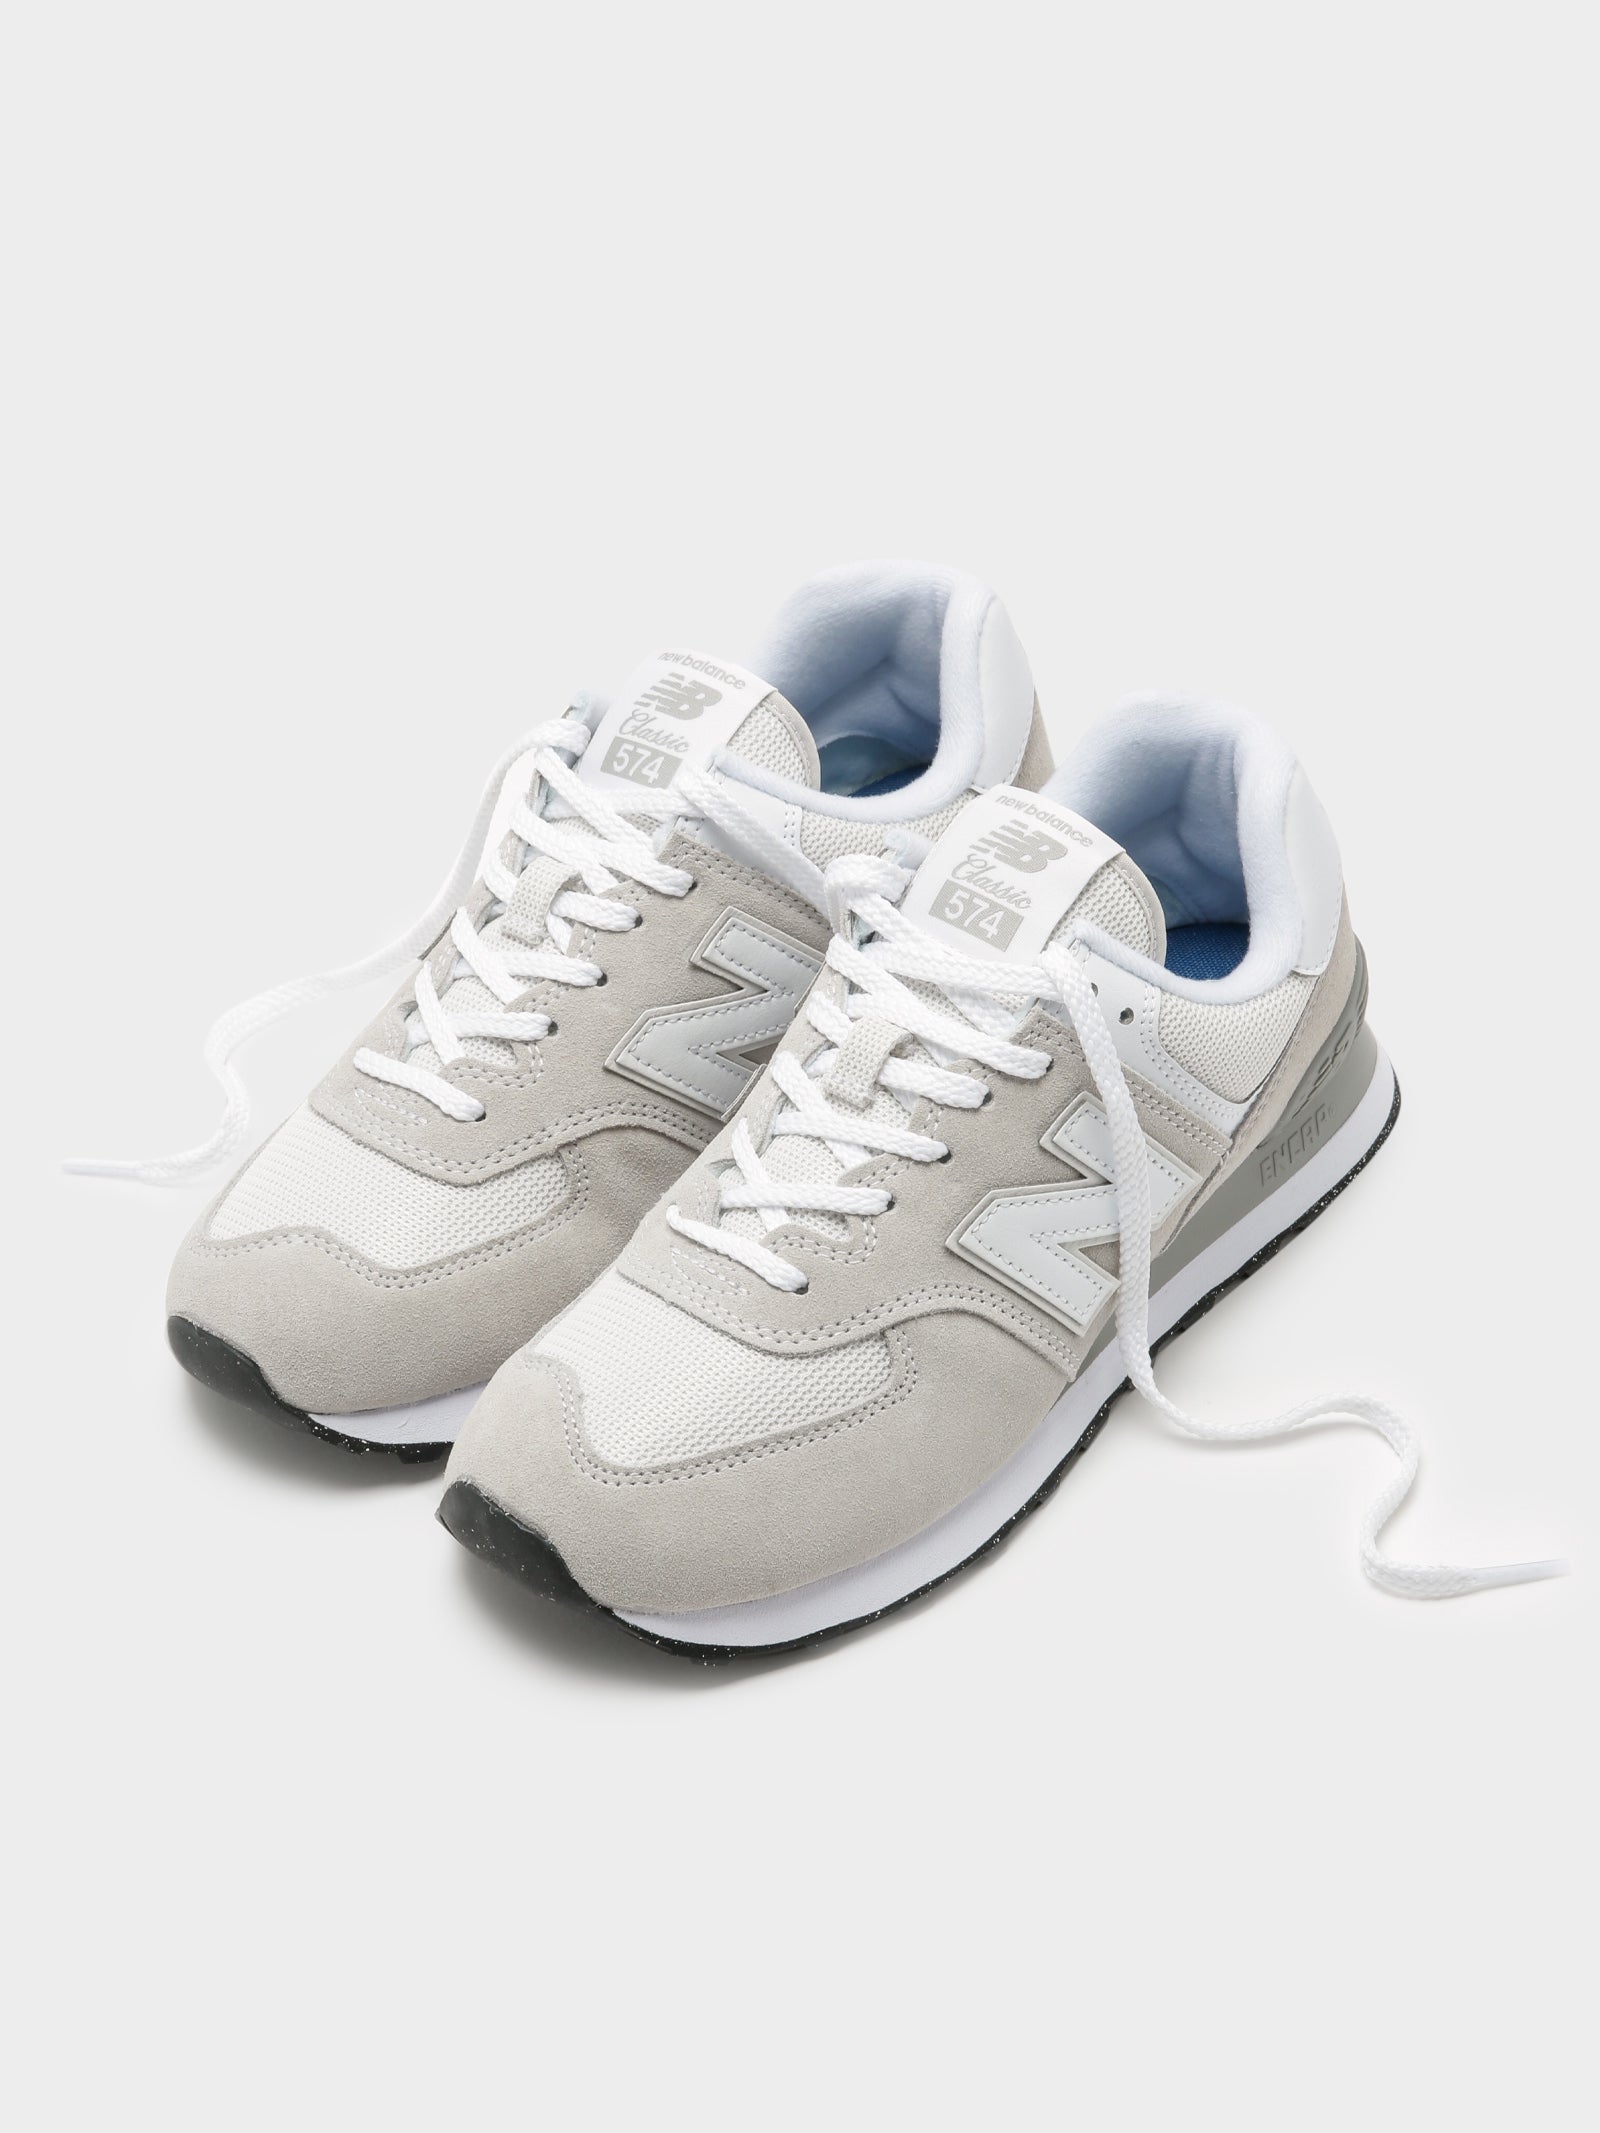 Dior B30 Sneaker Light Grey, White – Crep Select